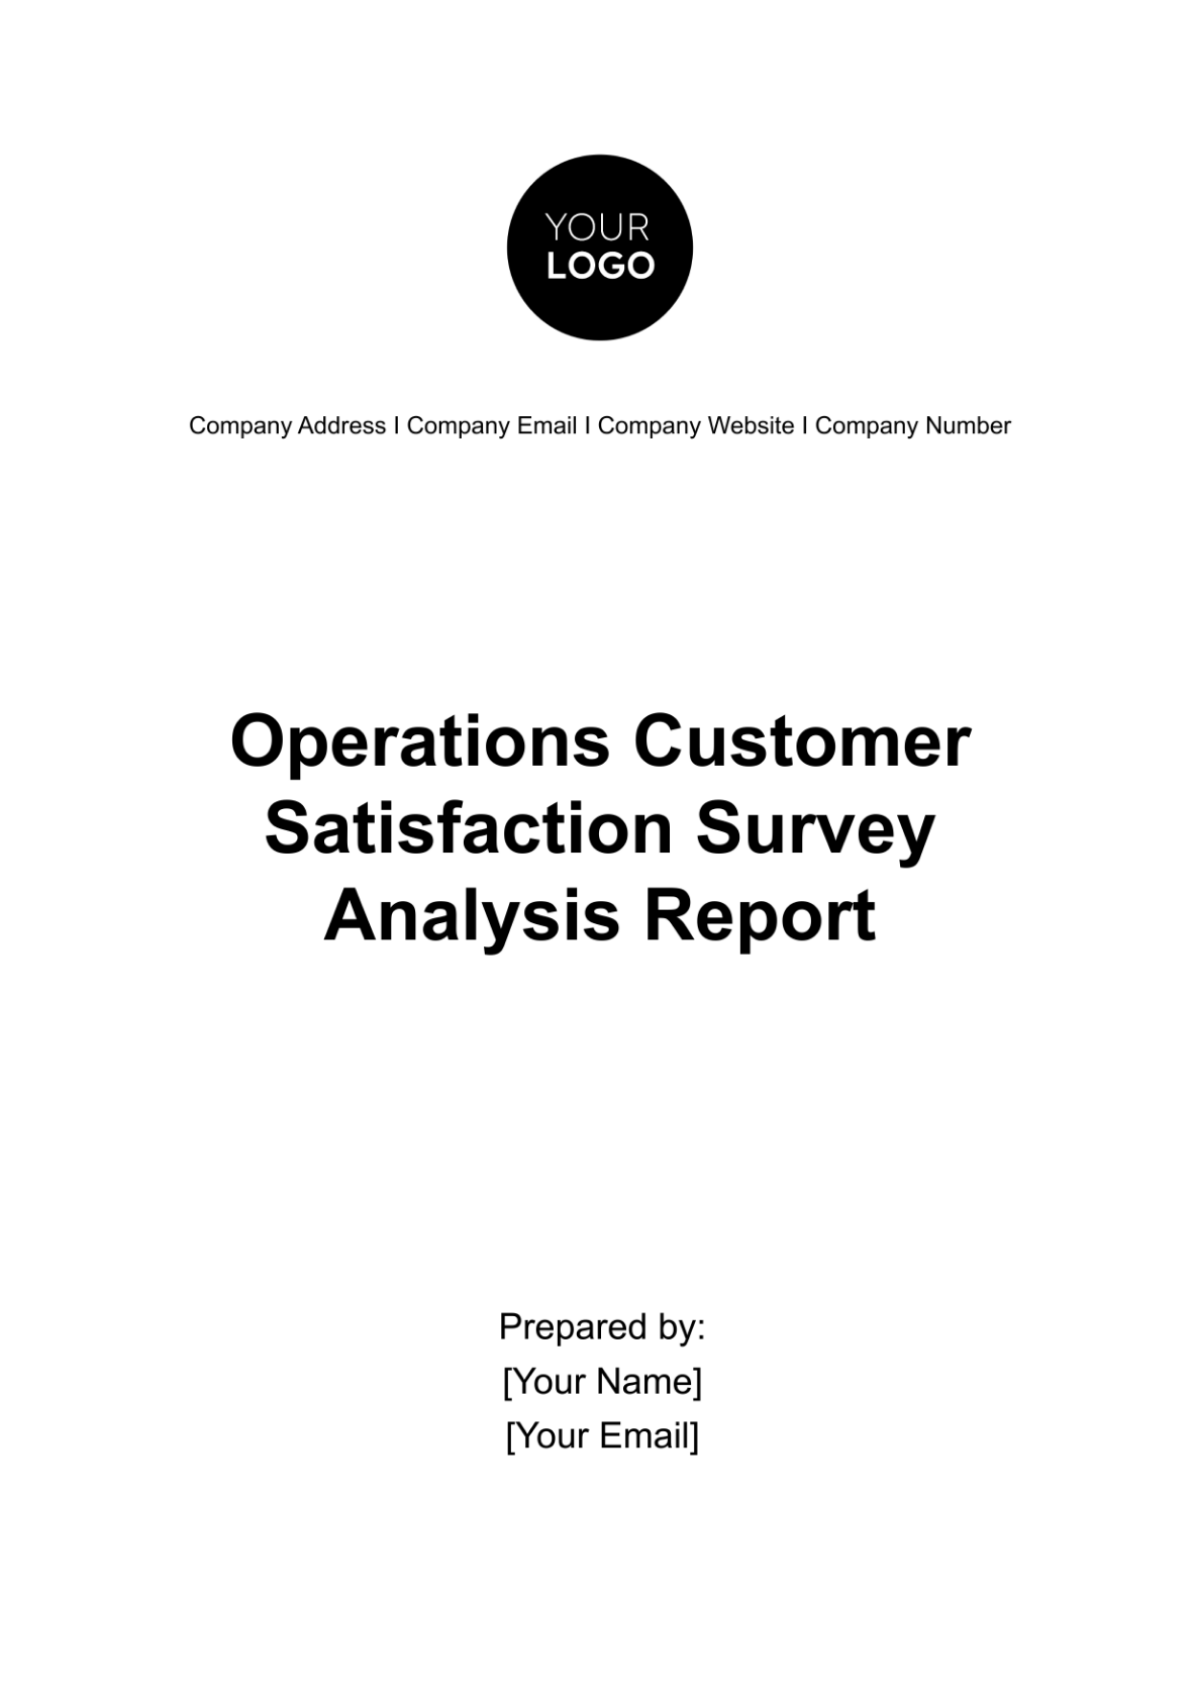 Operations Customer Satisfaction Survey Analysis Report Template